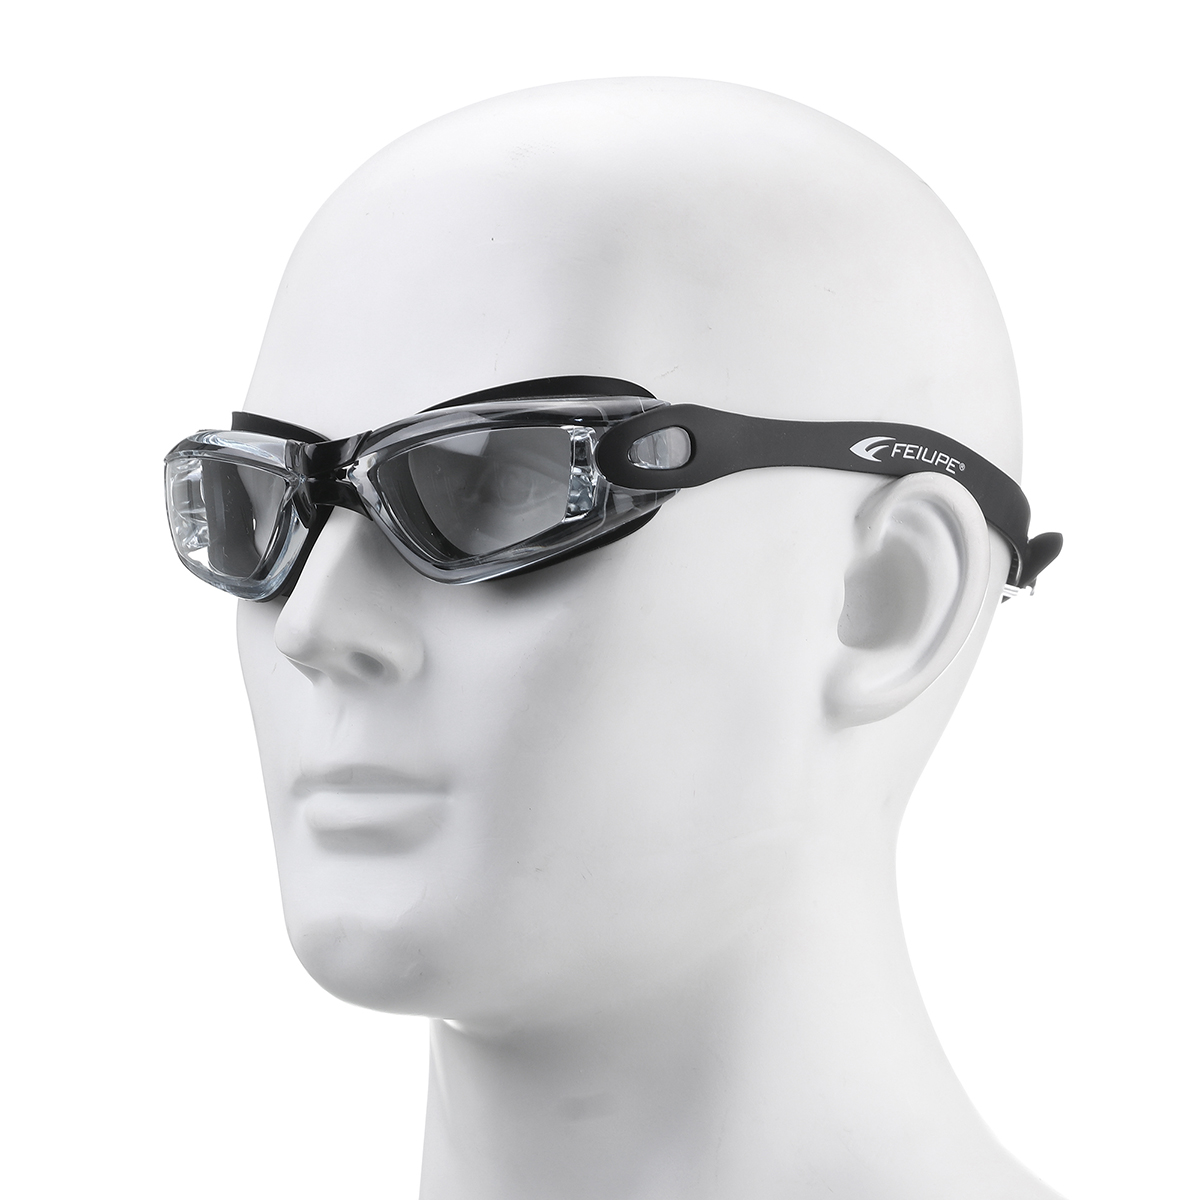 Swimming-Goggles-Anti-fog-Anti-UV-Fog-Protection-No-Leaking-Clear-Wide-Vision-Eye-Pool-Swim-Glassess-1723669-10